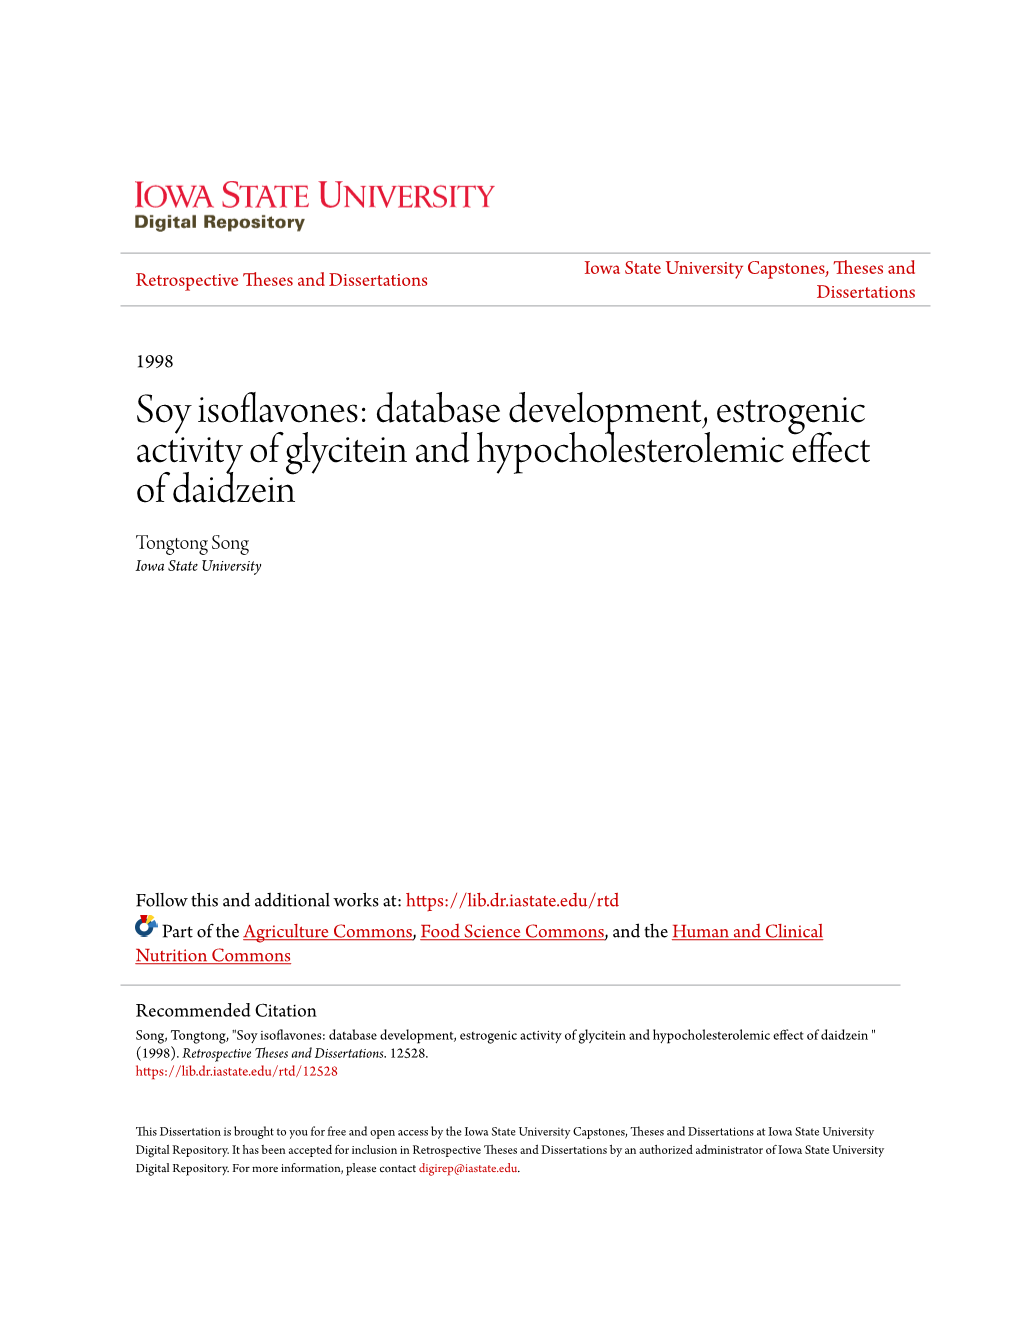 Soy Isoflavones: Database Development, Estrogenic Activity of Glycitein and Hypocholesterolemic Effect of Daidzein Tongtong Song Iowa State University